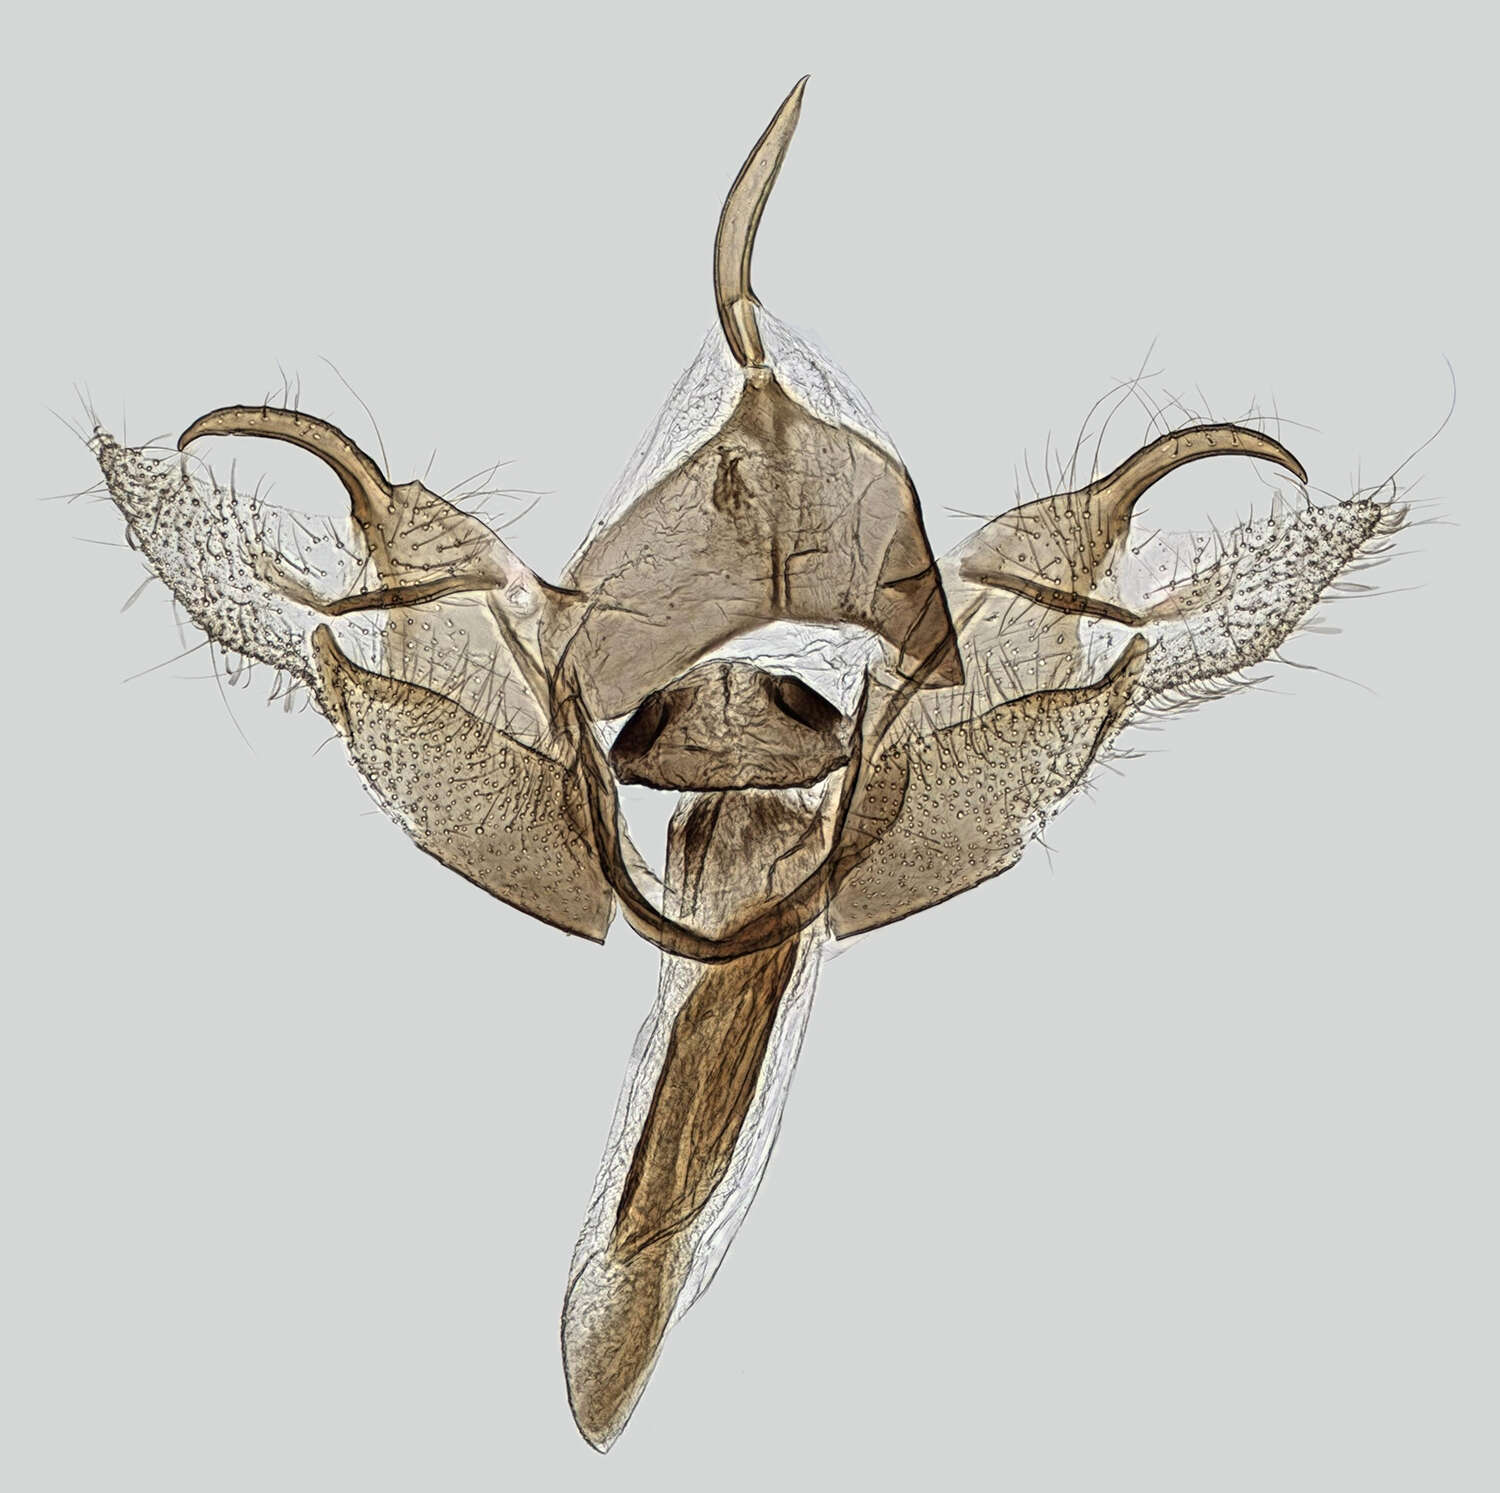 Image of Epermenia falciformis